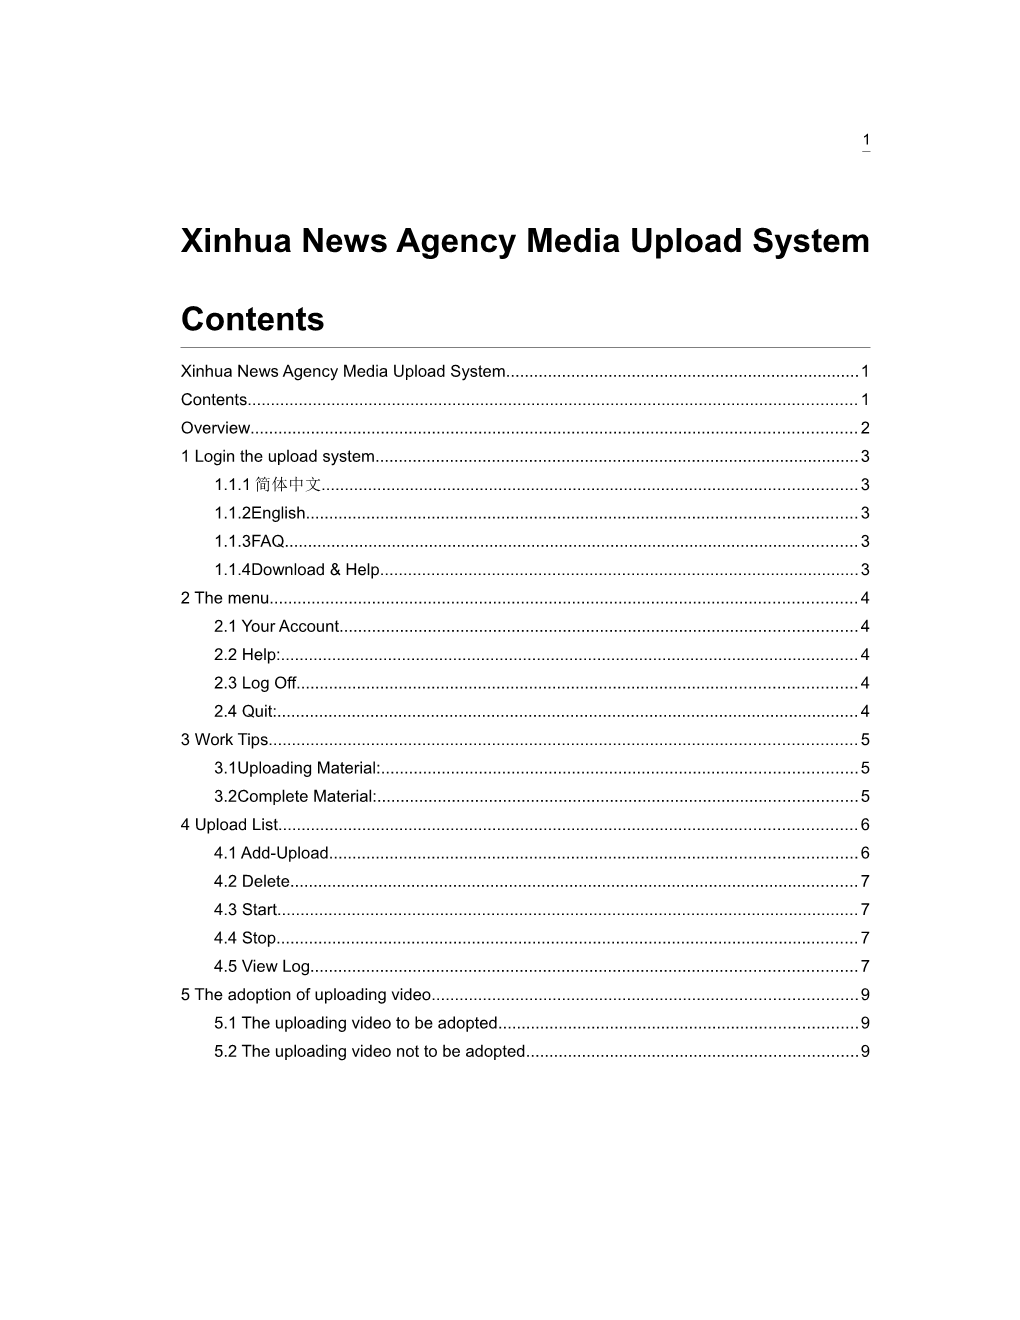 Xinhua News Agency Mediaupload System